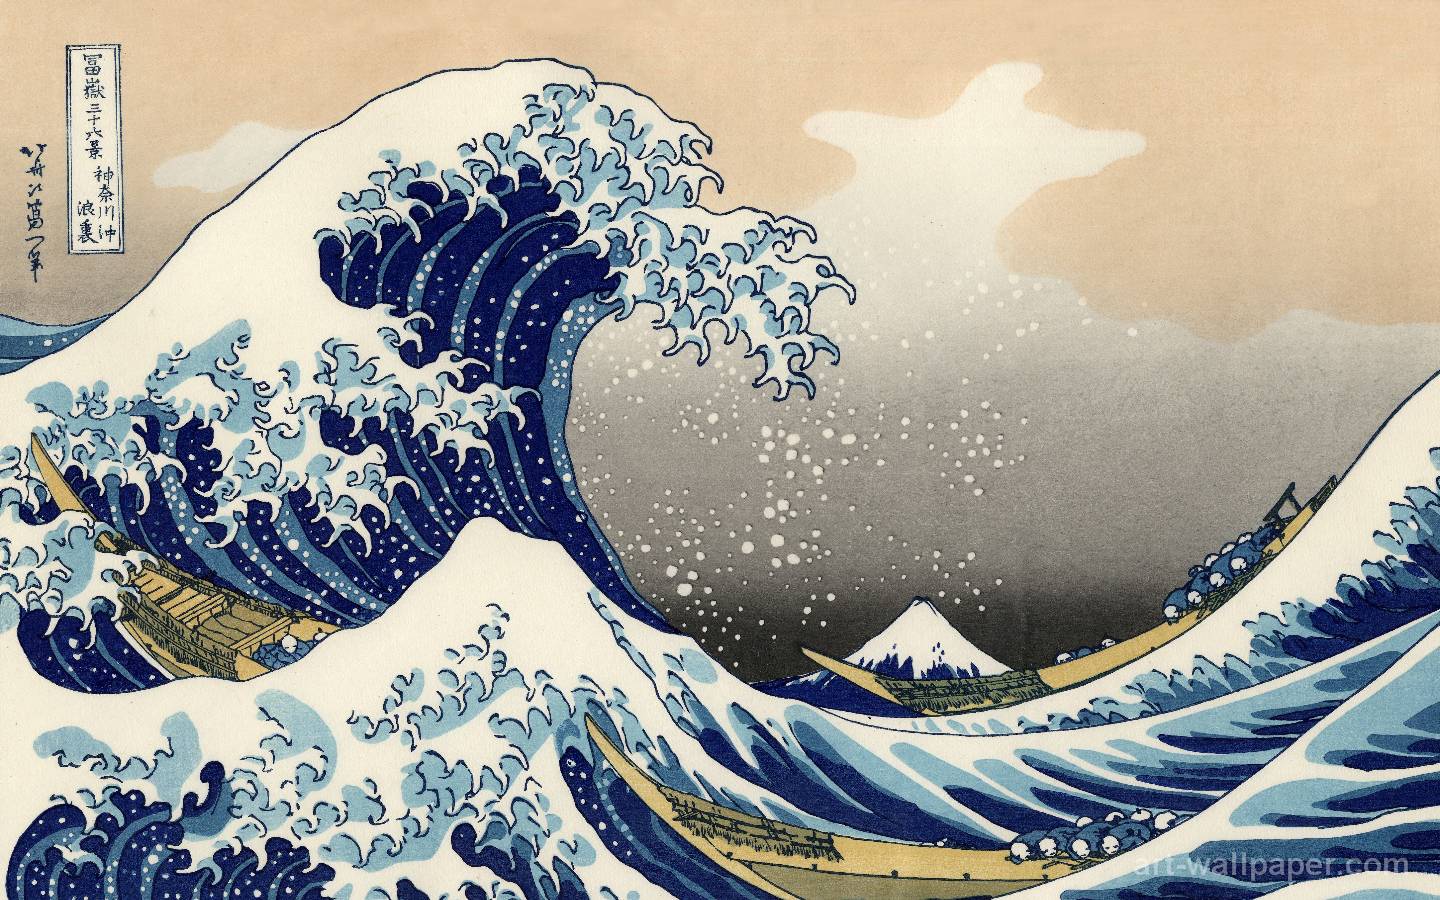 ocean artwork the great wave off kanagawa katsushika HD Wallpaper of